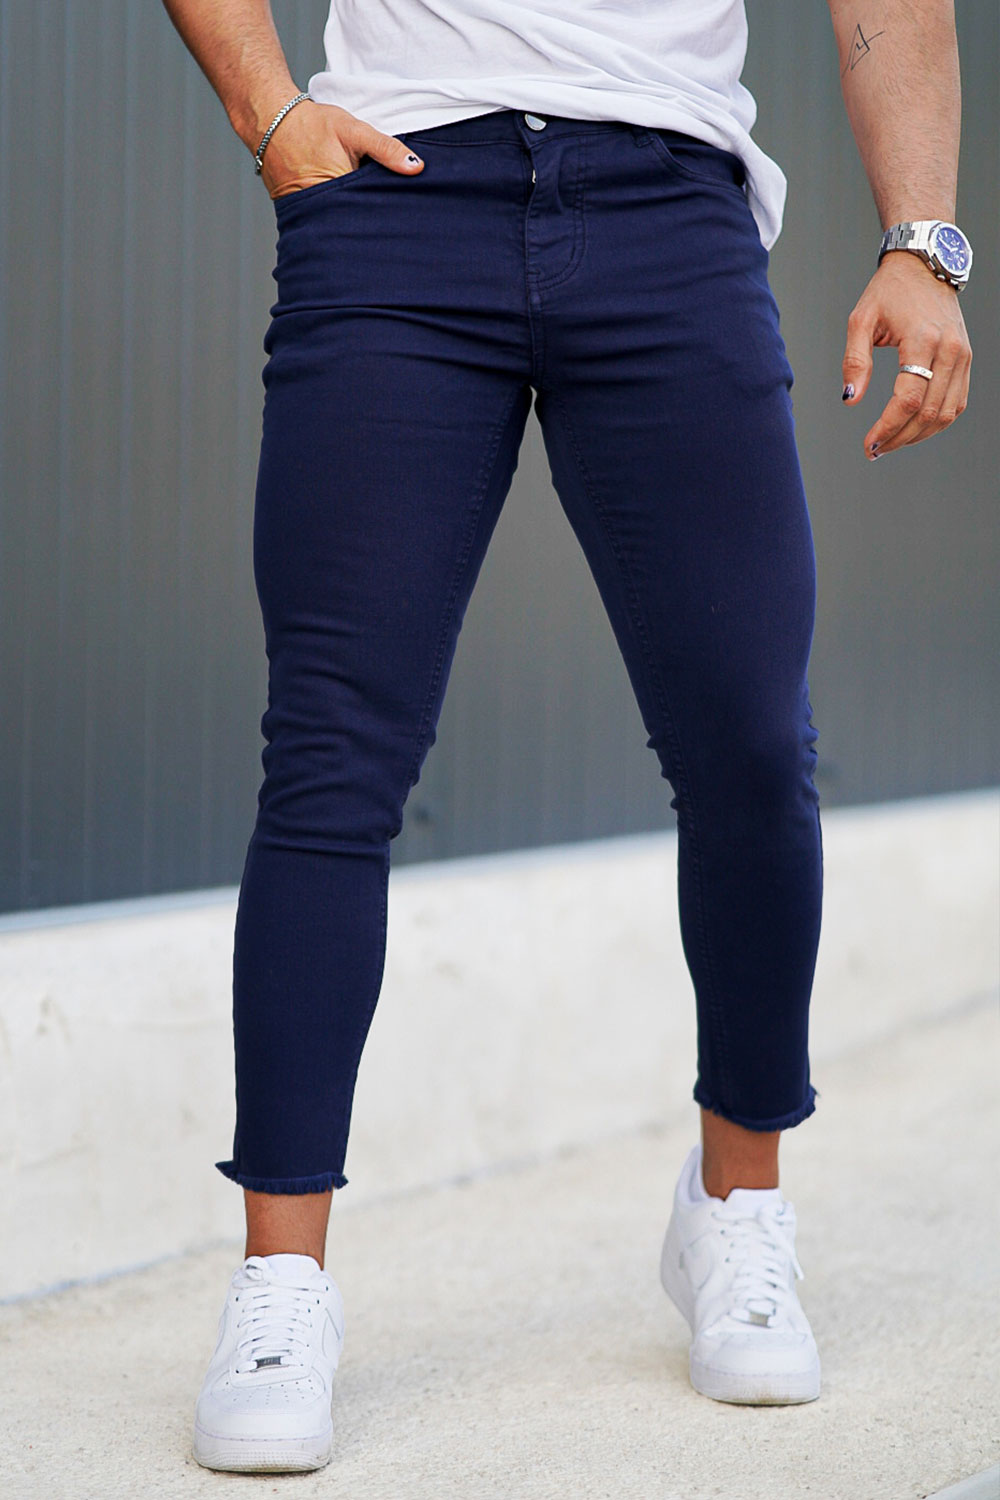 navy blue skinny jeans